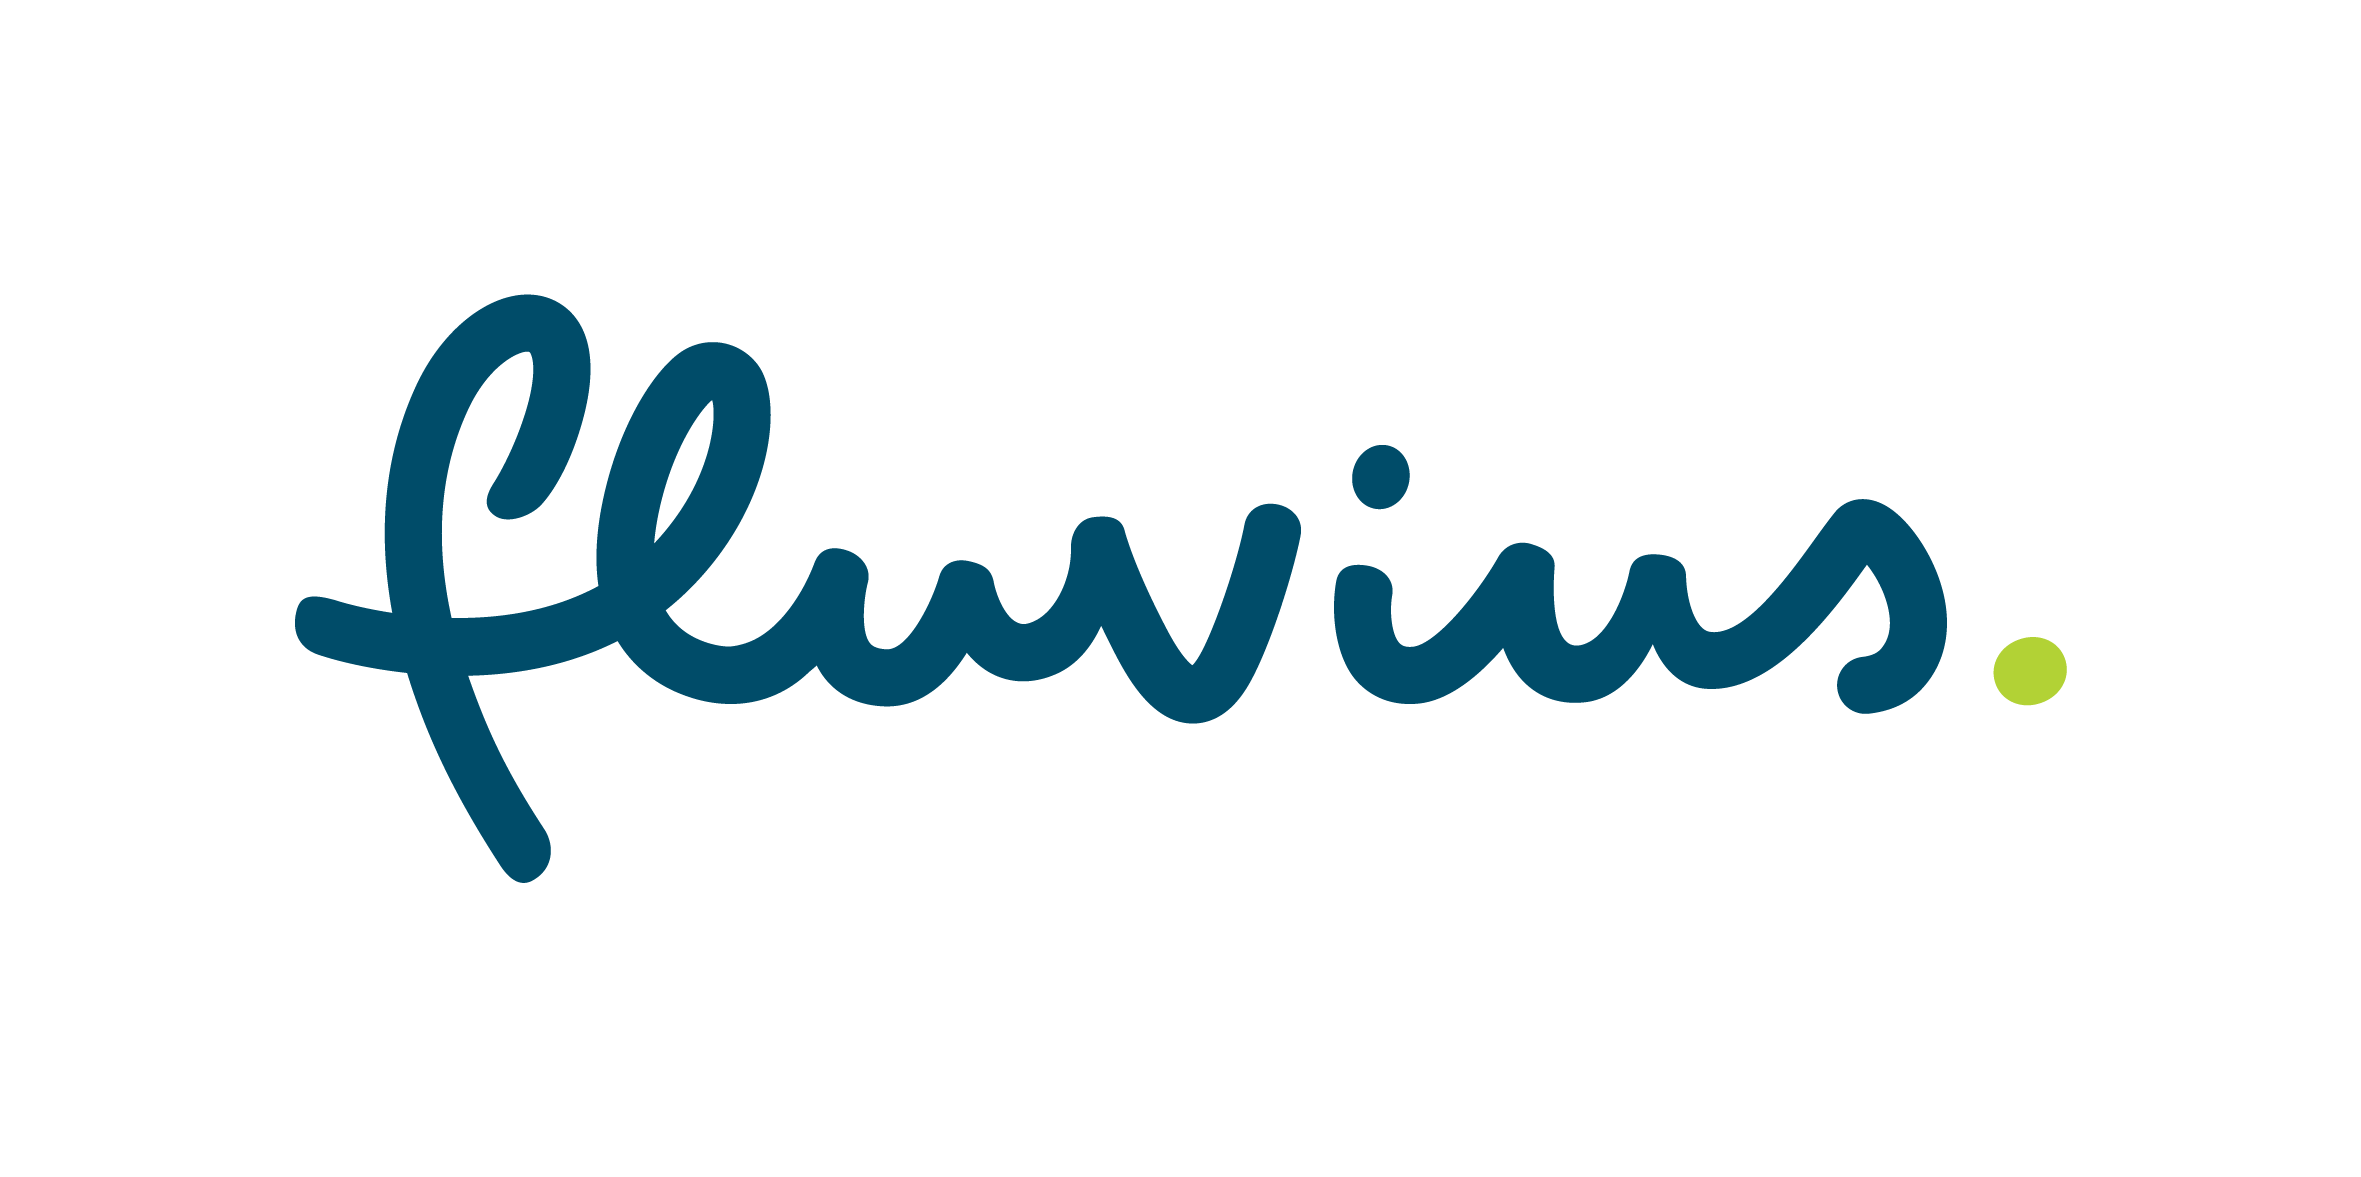 Fluvius Logo POS RGB